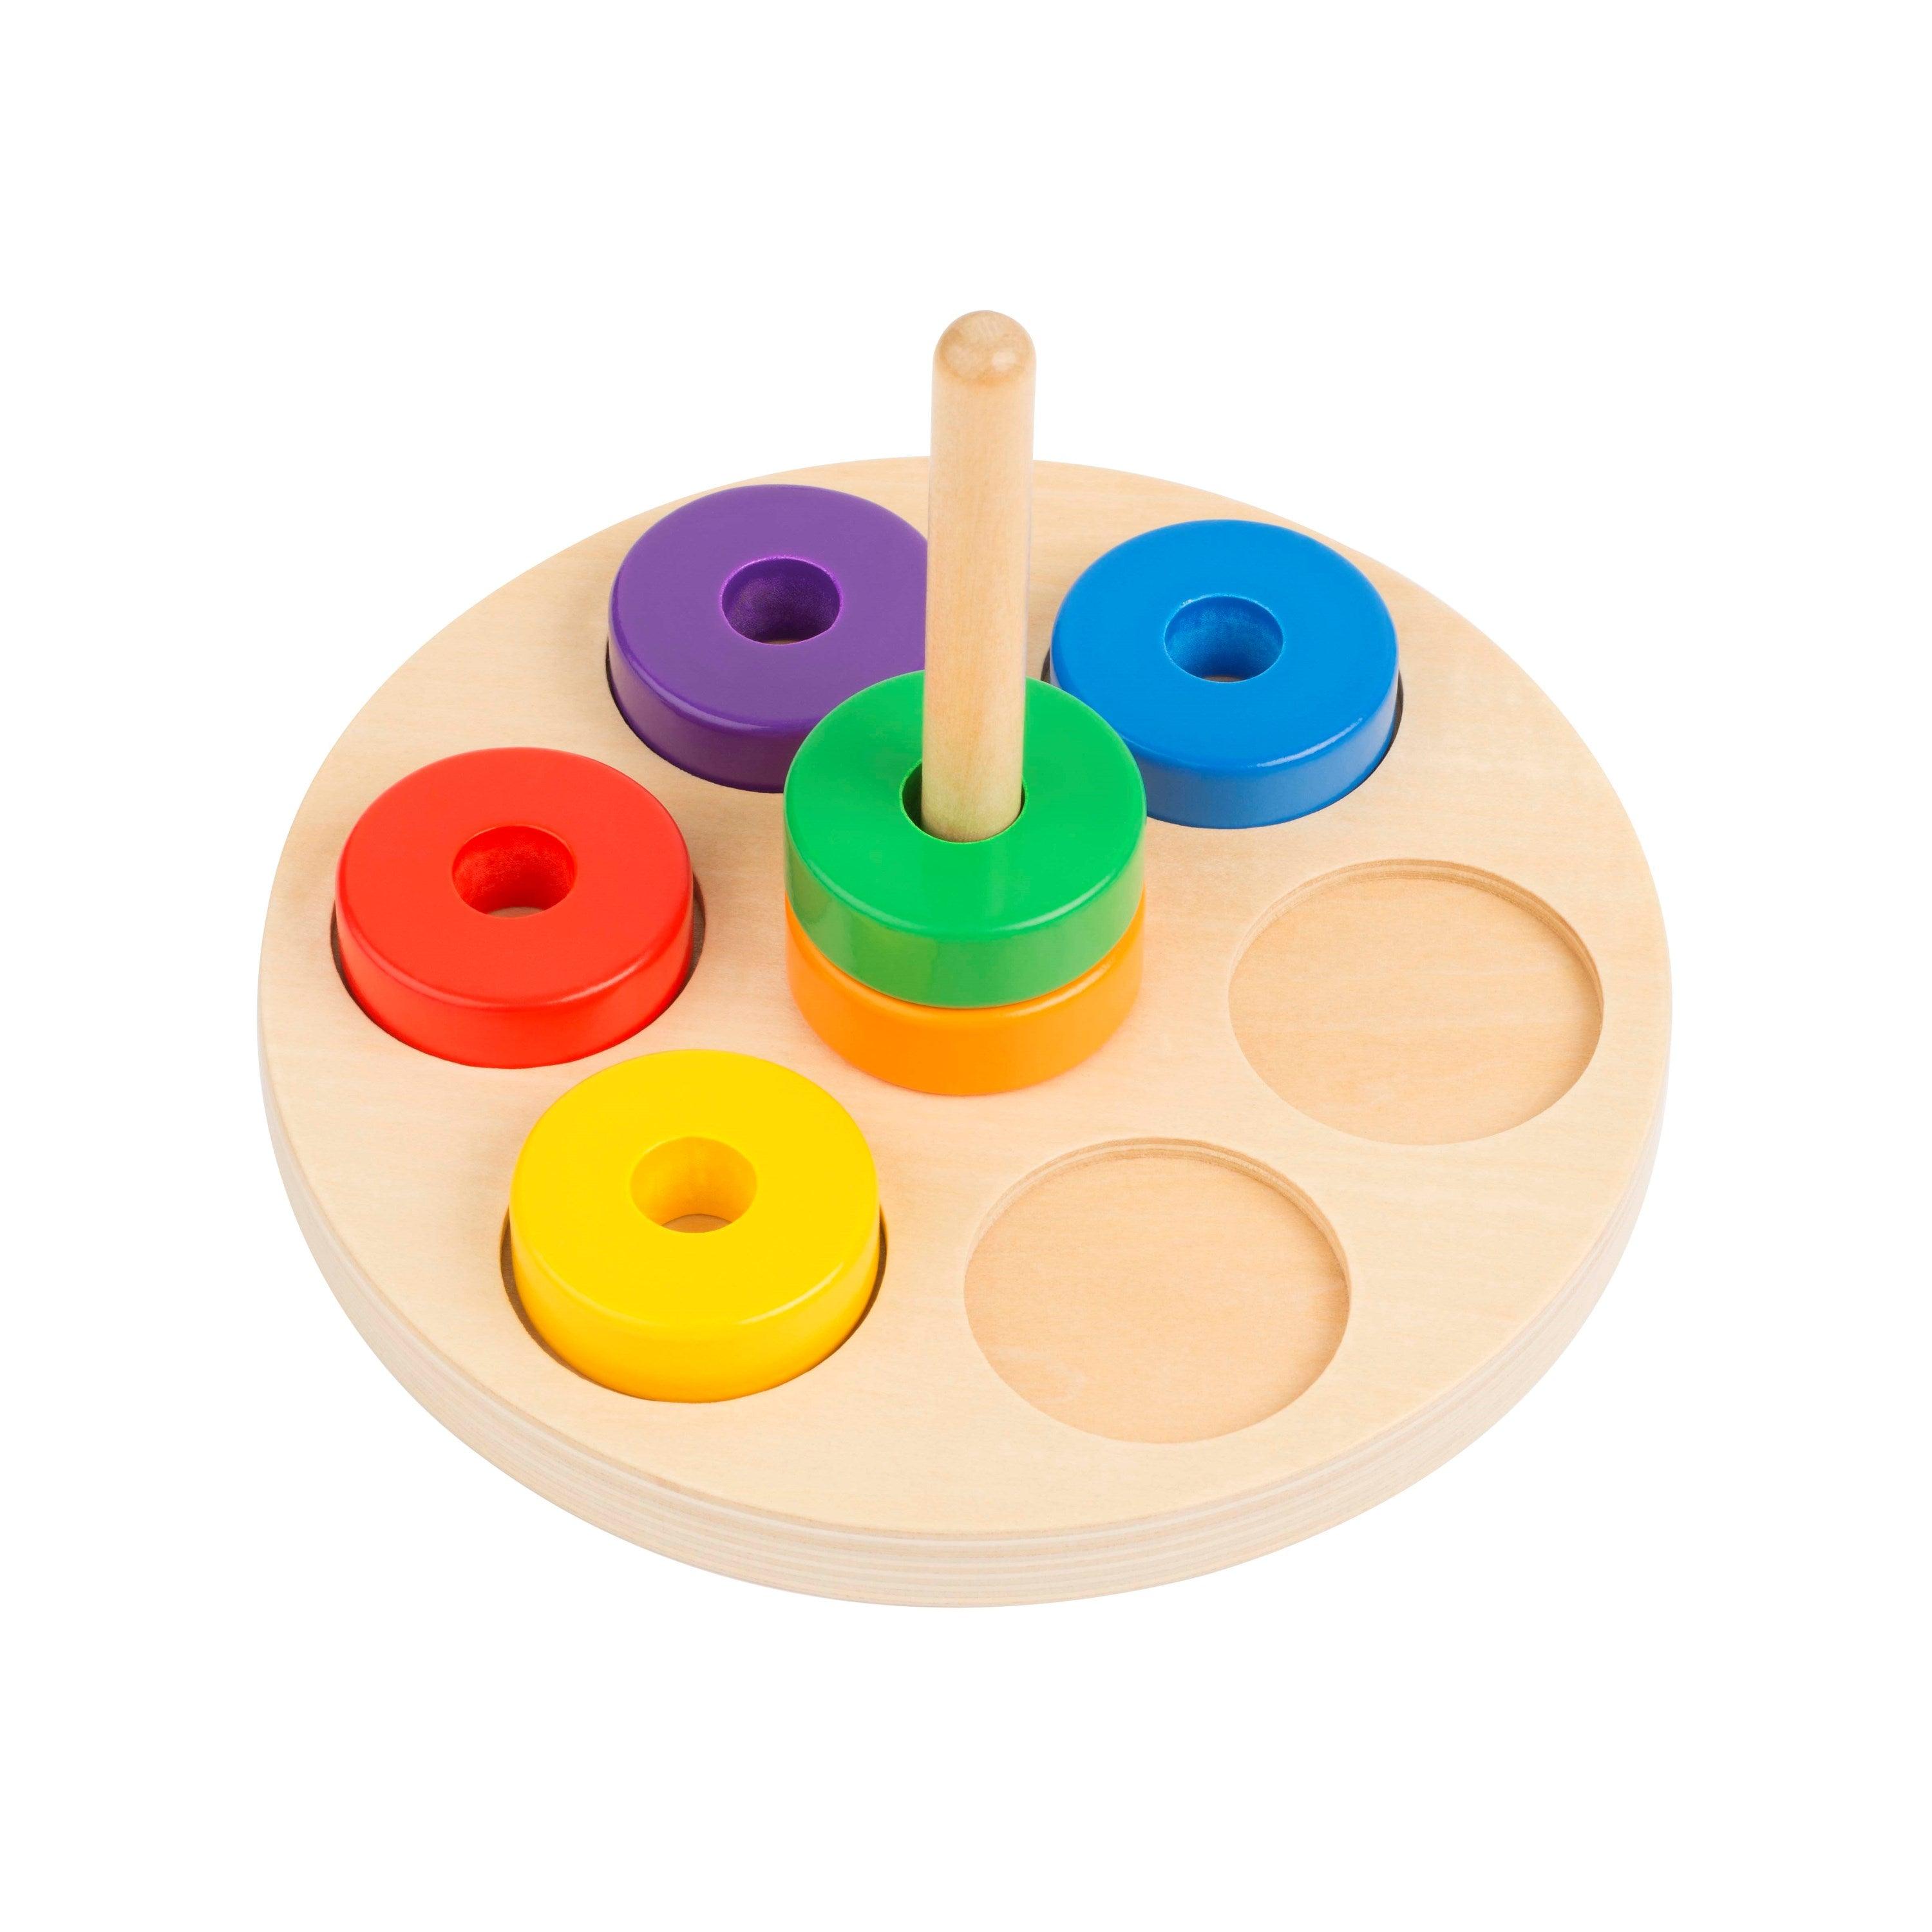 Educo: Stapeln Sie das Ring -Montessori -Material